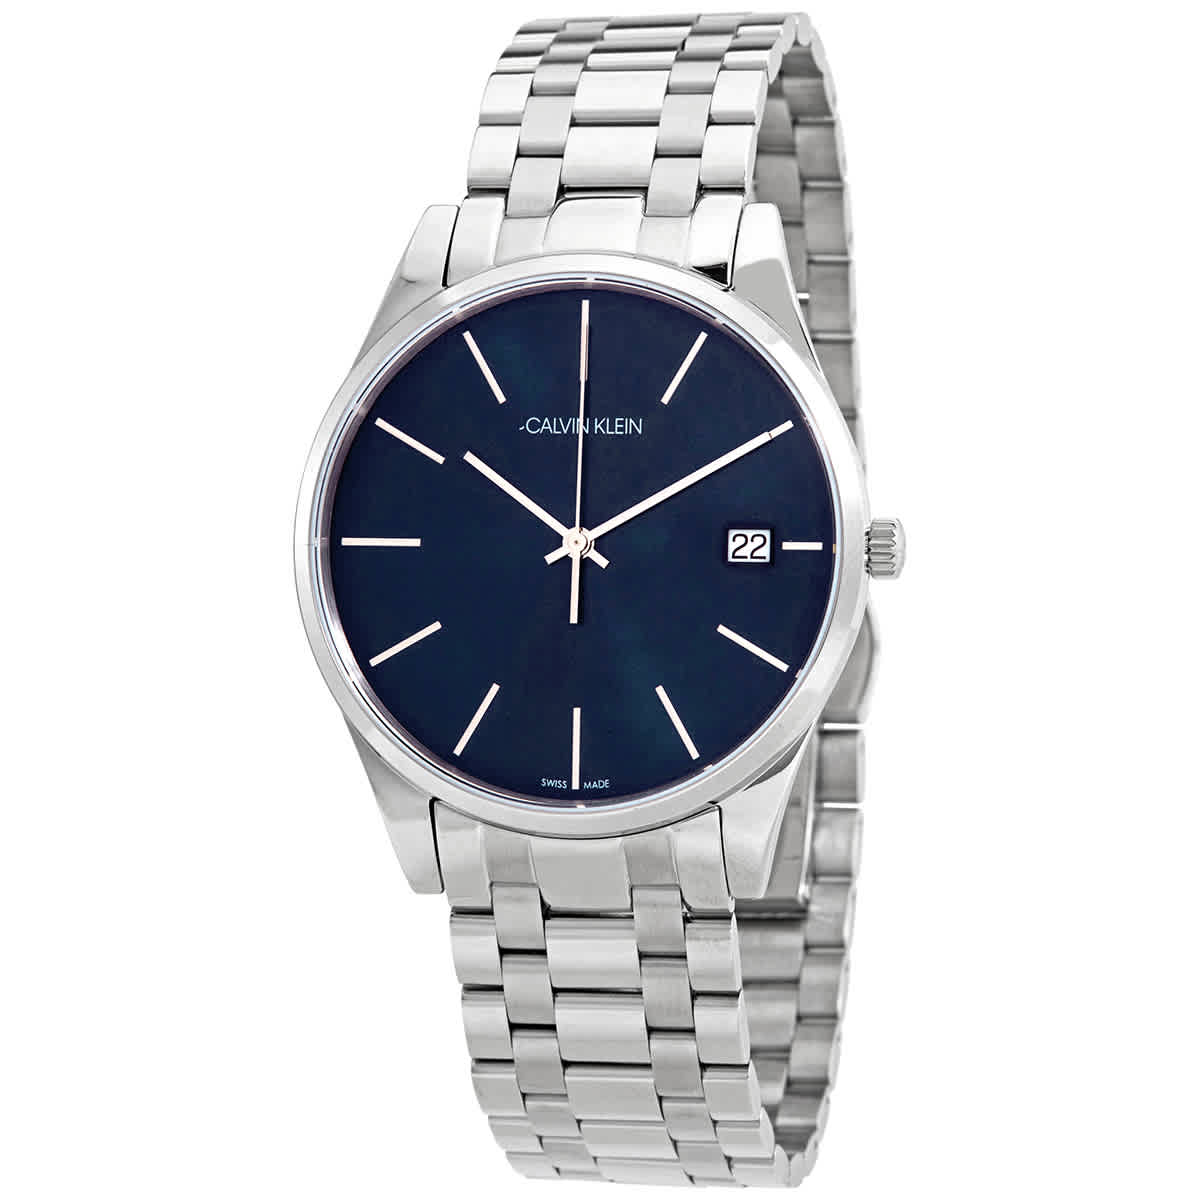 Calvin Klein Time Quartz Blue Dial Men's Watch K4N2114N | eBay